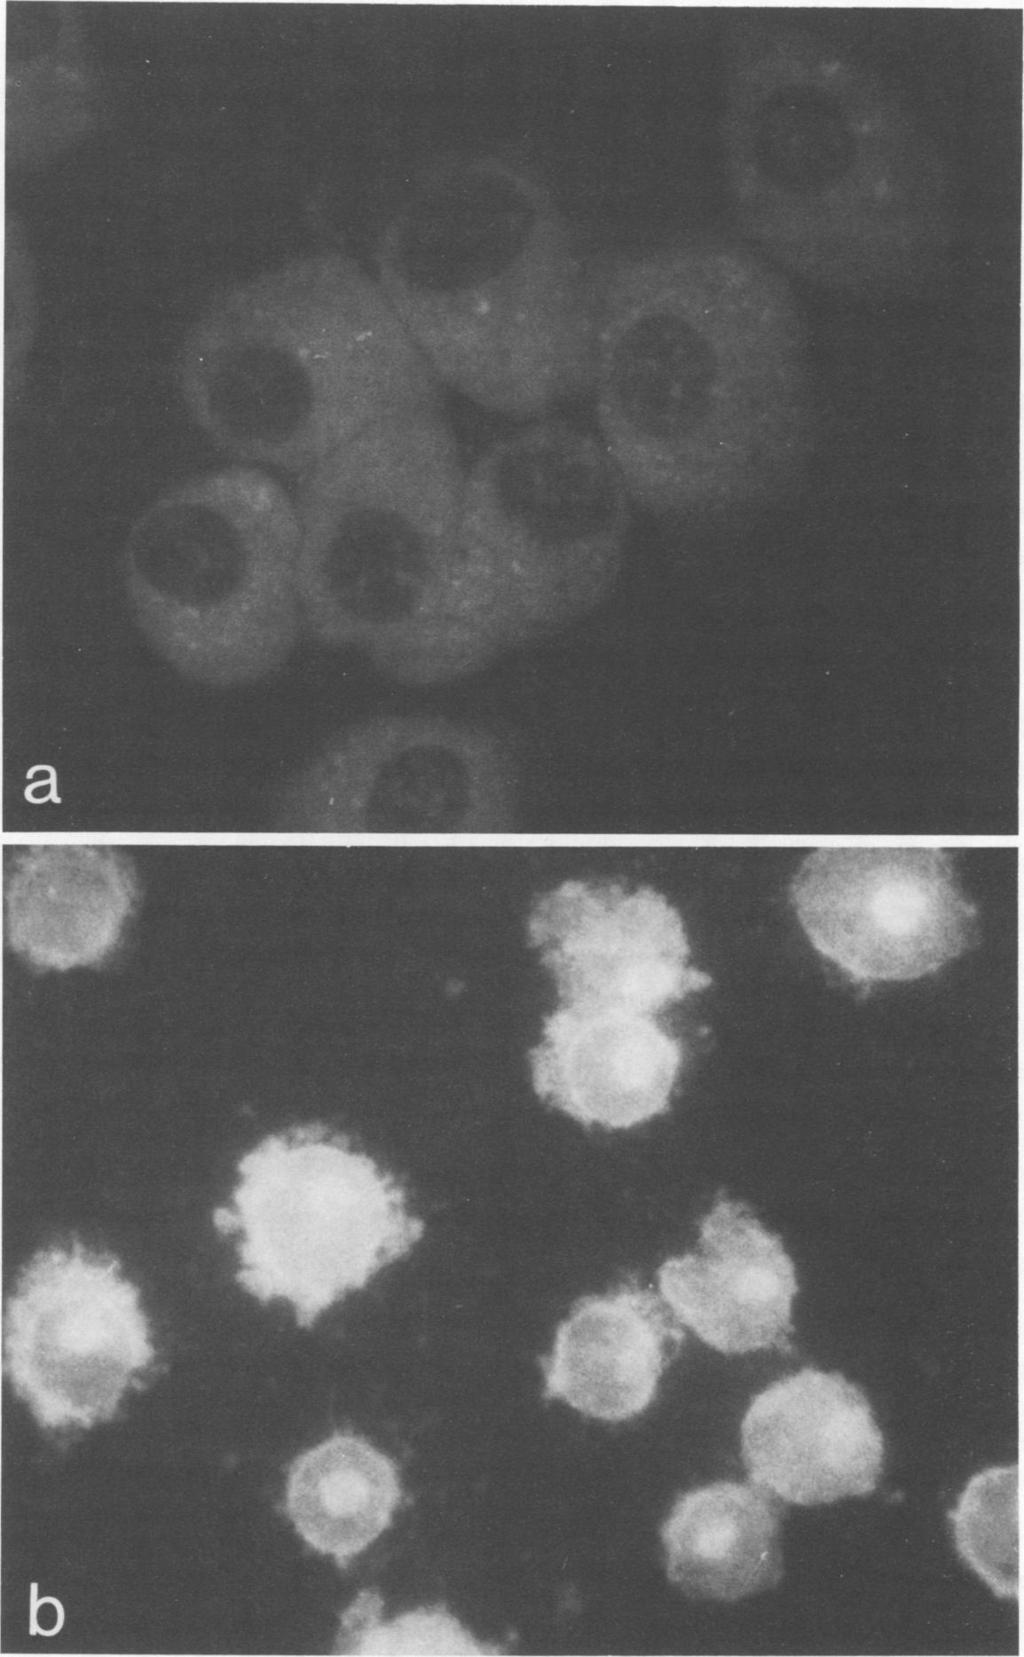 VOL. 31, 1981 INFLUENZA VIRUS-MOUSE MACROPHAGE INTERACTION 755 FIG. 4. Immunofluorescent staining of alveolar macrophages infected with Kunz influenza virus.